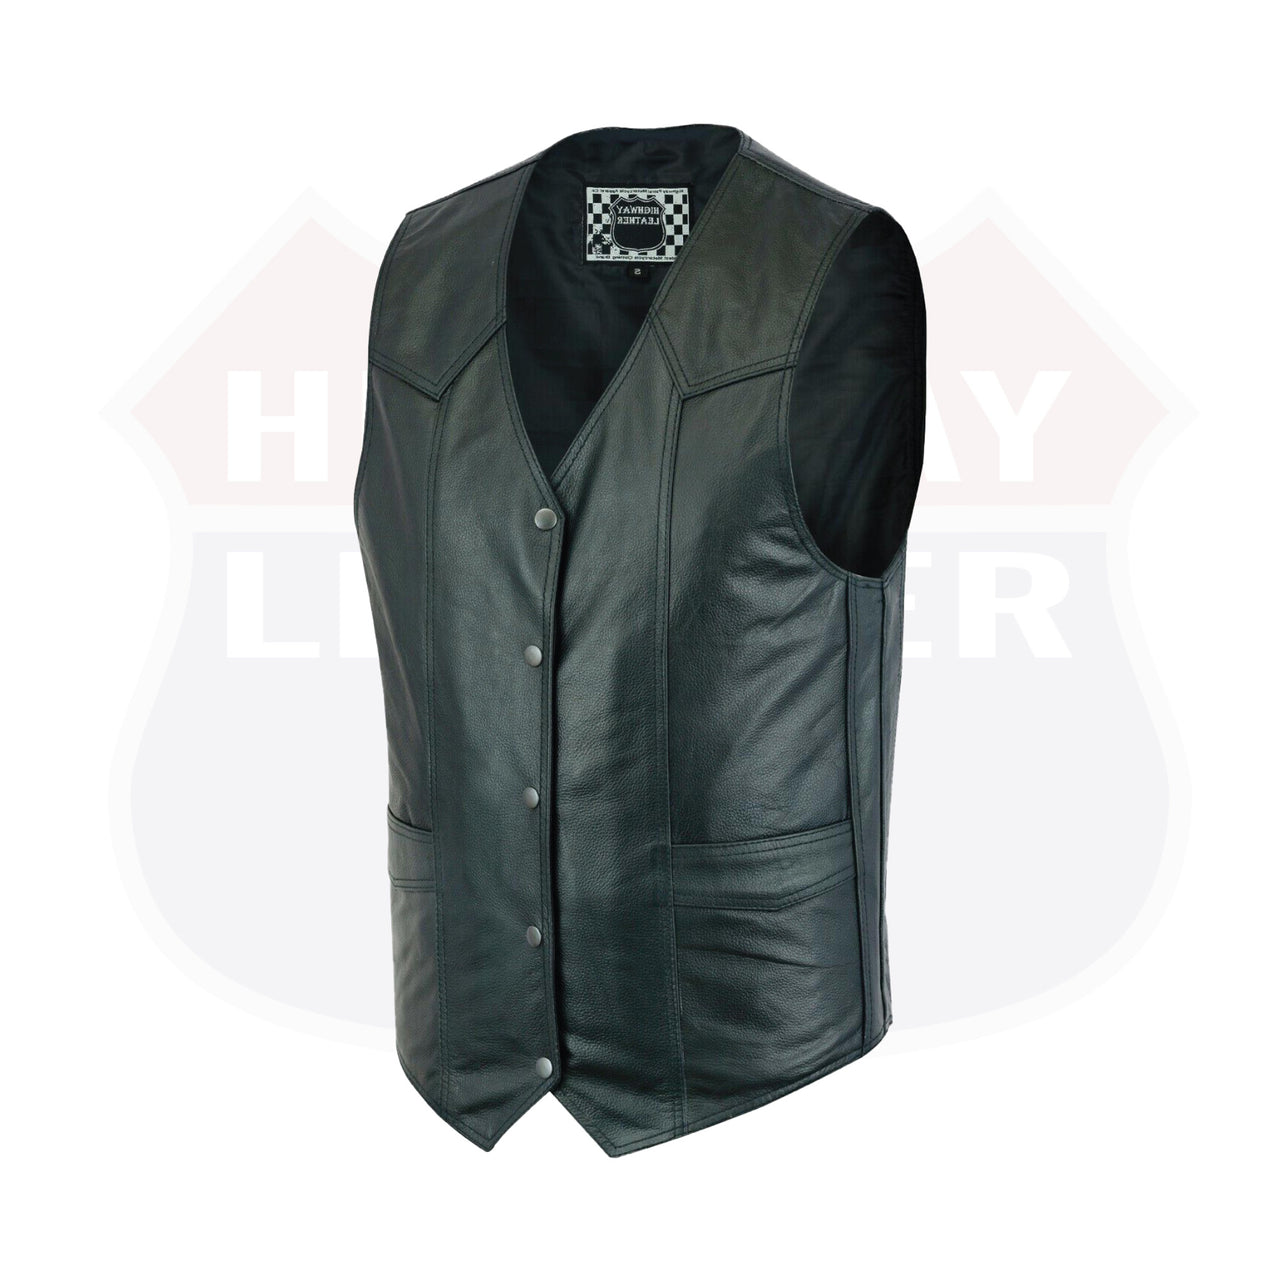 HL11600NKD Men's Motorcycle Leather Vest - The Classic Plain Biker Vest - HighwayLeather